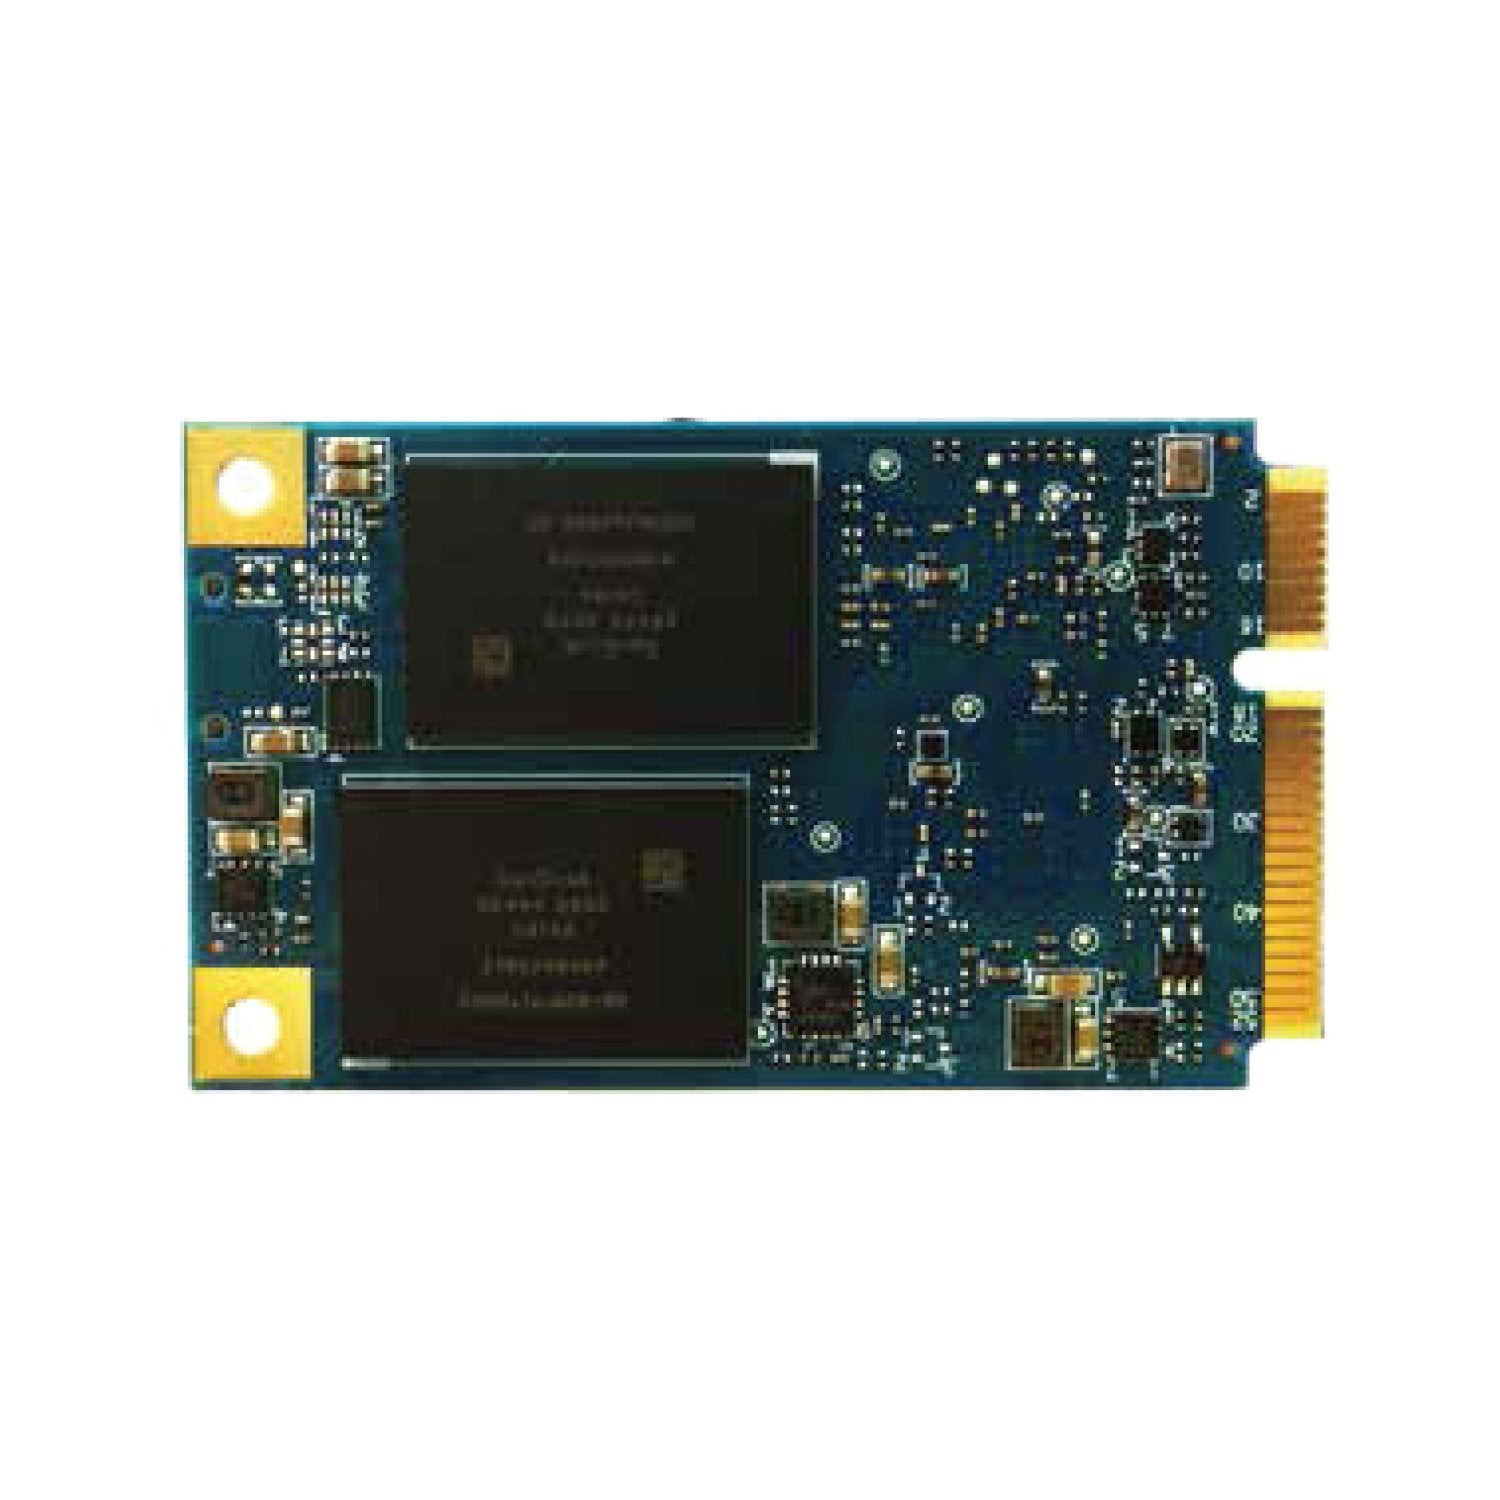 SanDisk Ultra II mSATA 512GB Solid State Drive 2-Inch SDMSATA-512G-G25